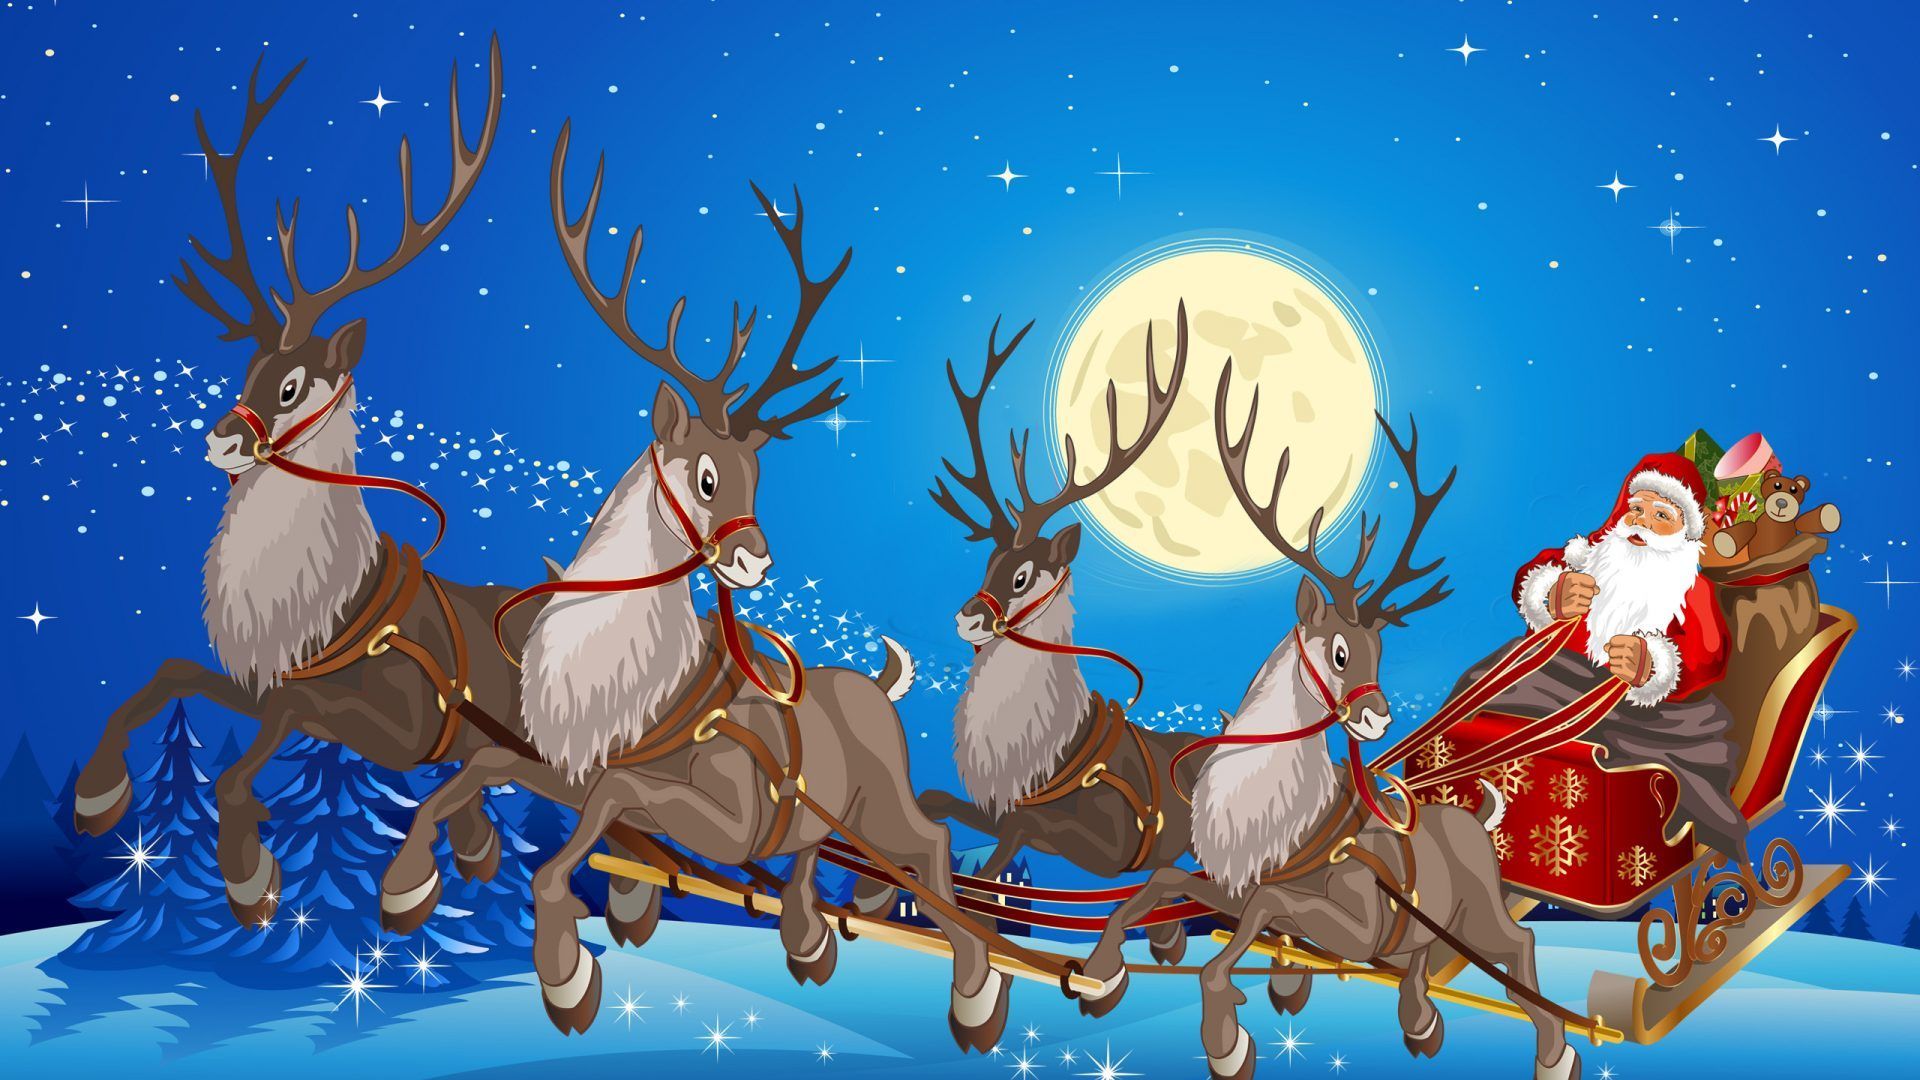 Santa Claus Wallpaper for Christmas. Santa claus wallpaper, Christmas wallpaper hd, Christmas wallpaper